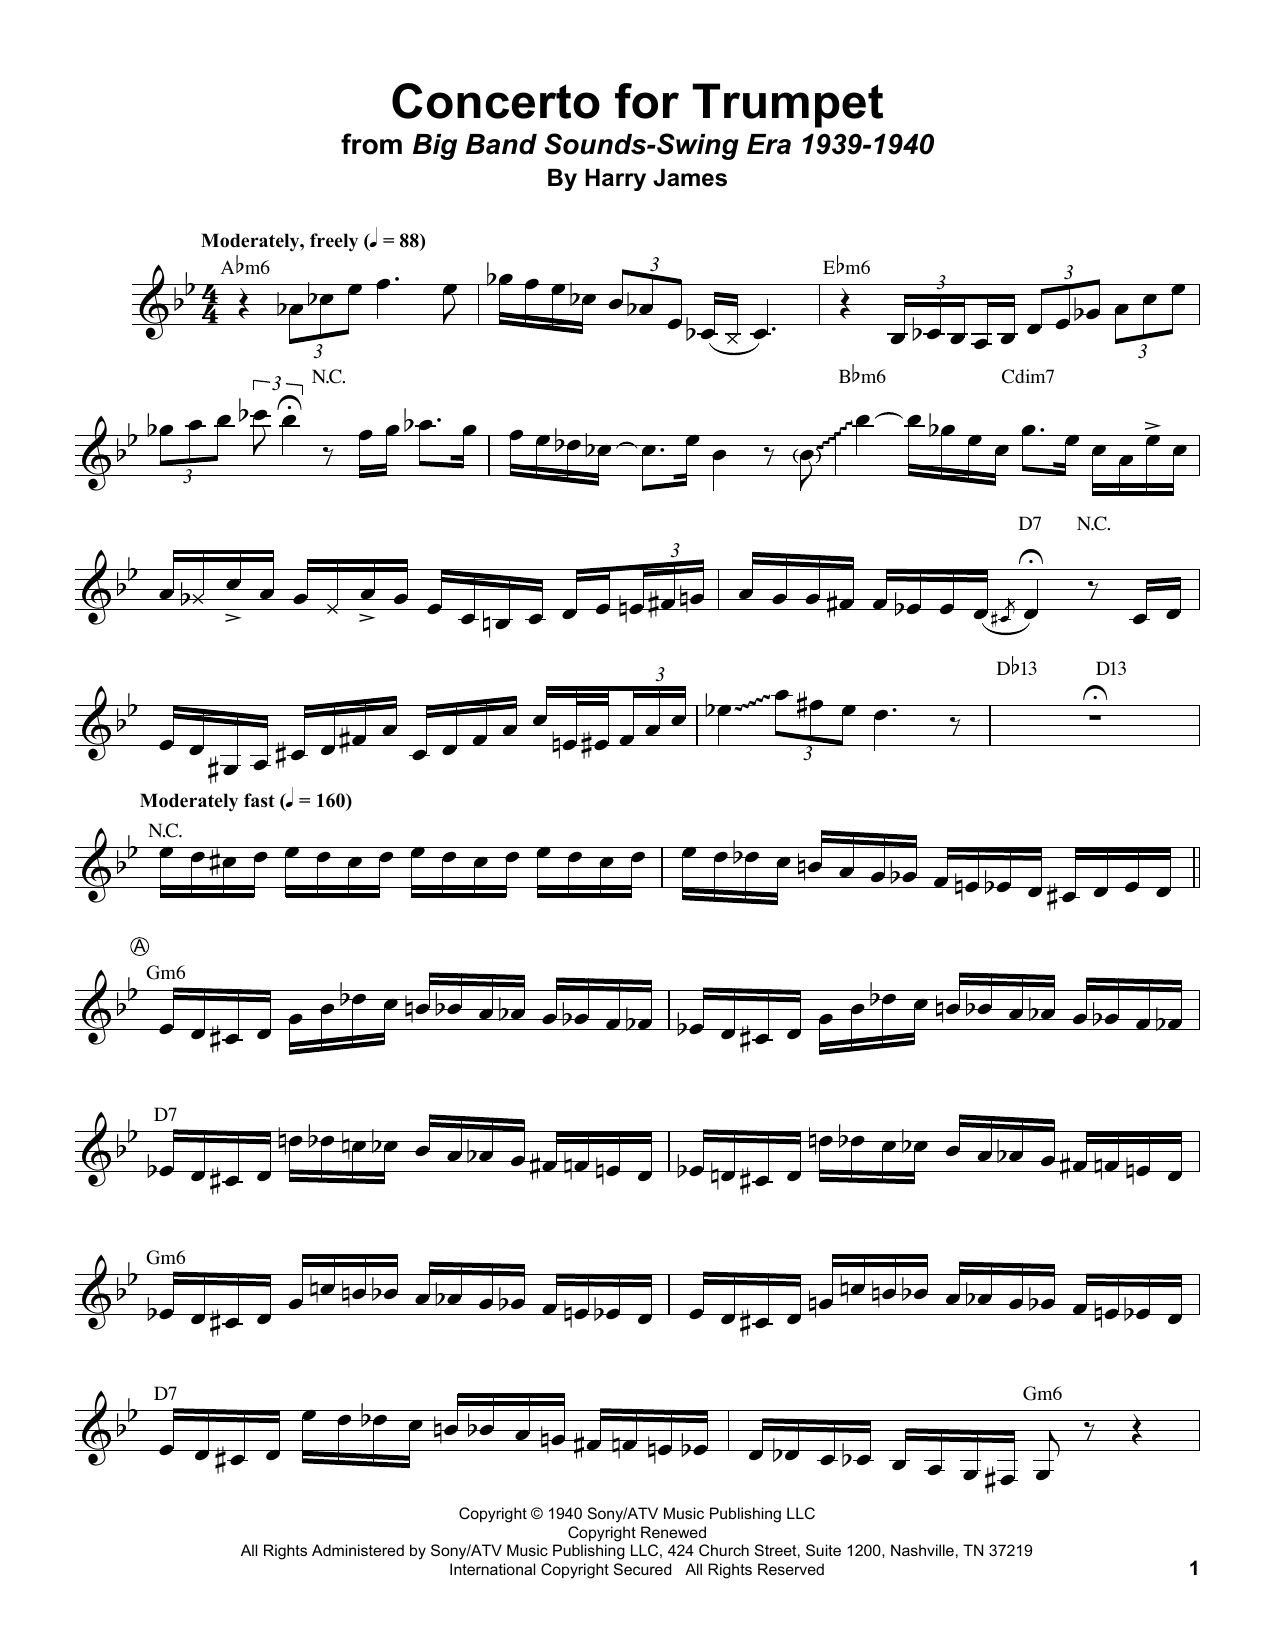 Harry James Concerto For Trumpet Sheet Music Notes & Chords for Trumpet Transcription - Download or Print PDF